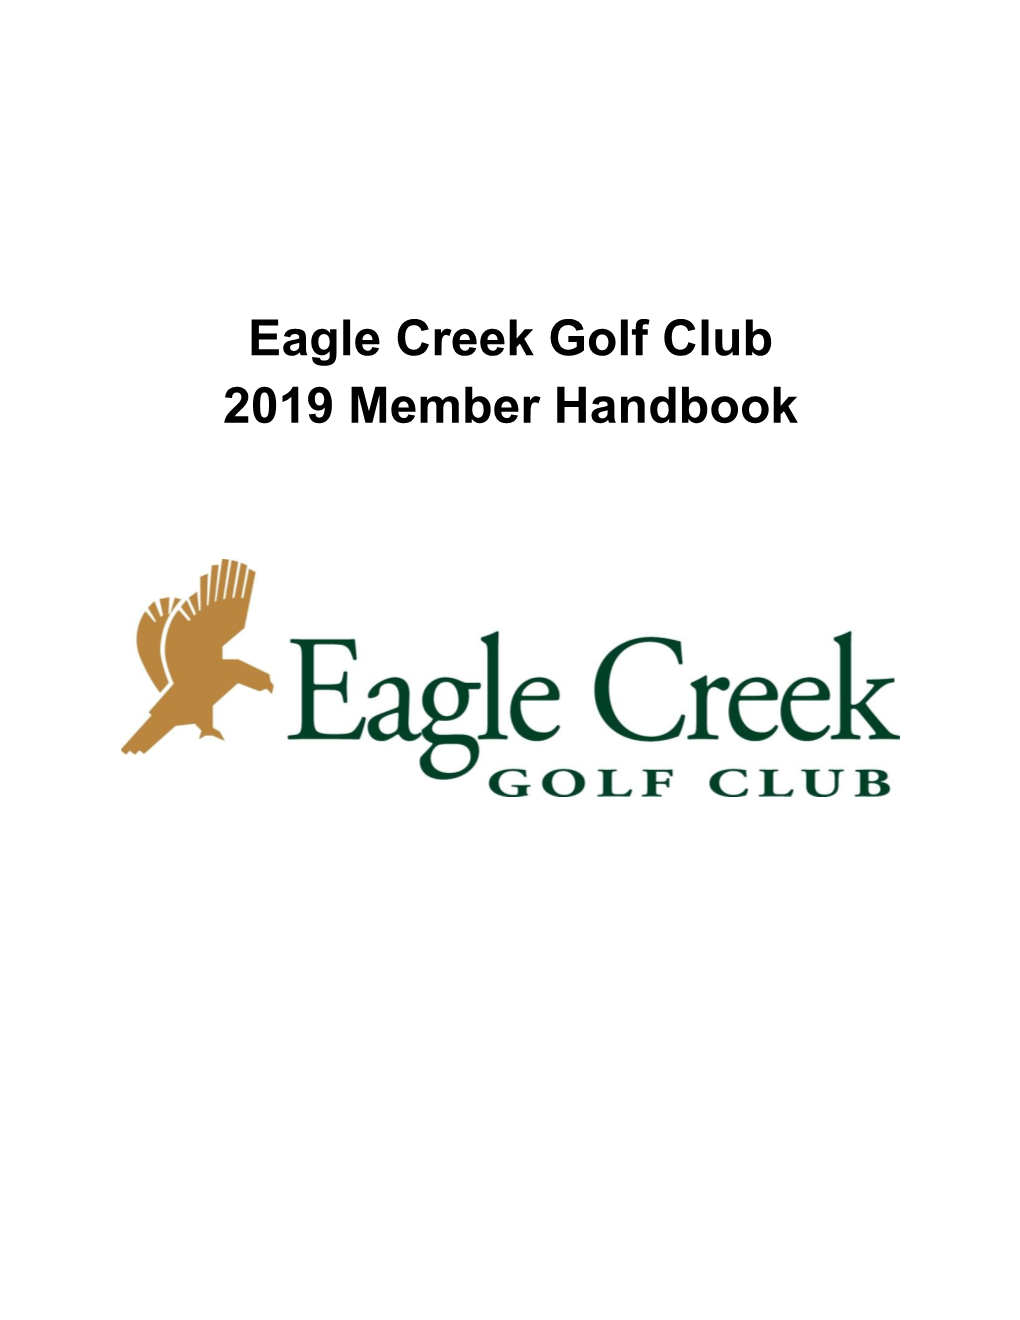 Eagle Creek Golf Club 2019 Member Handbook